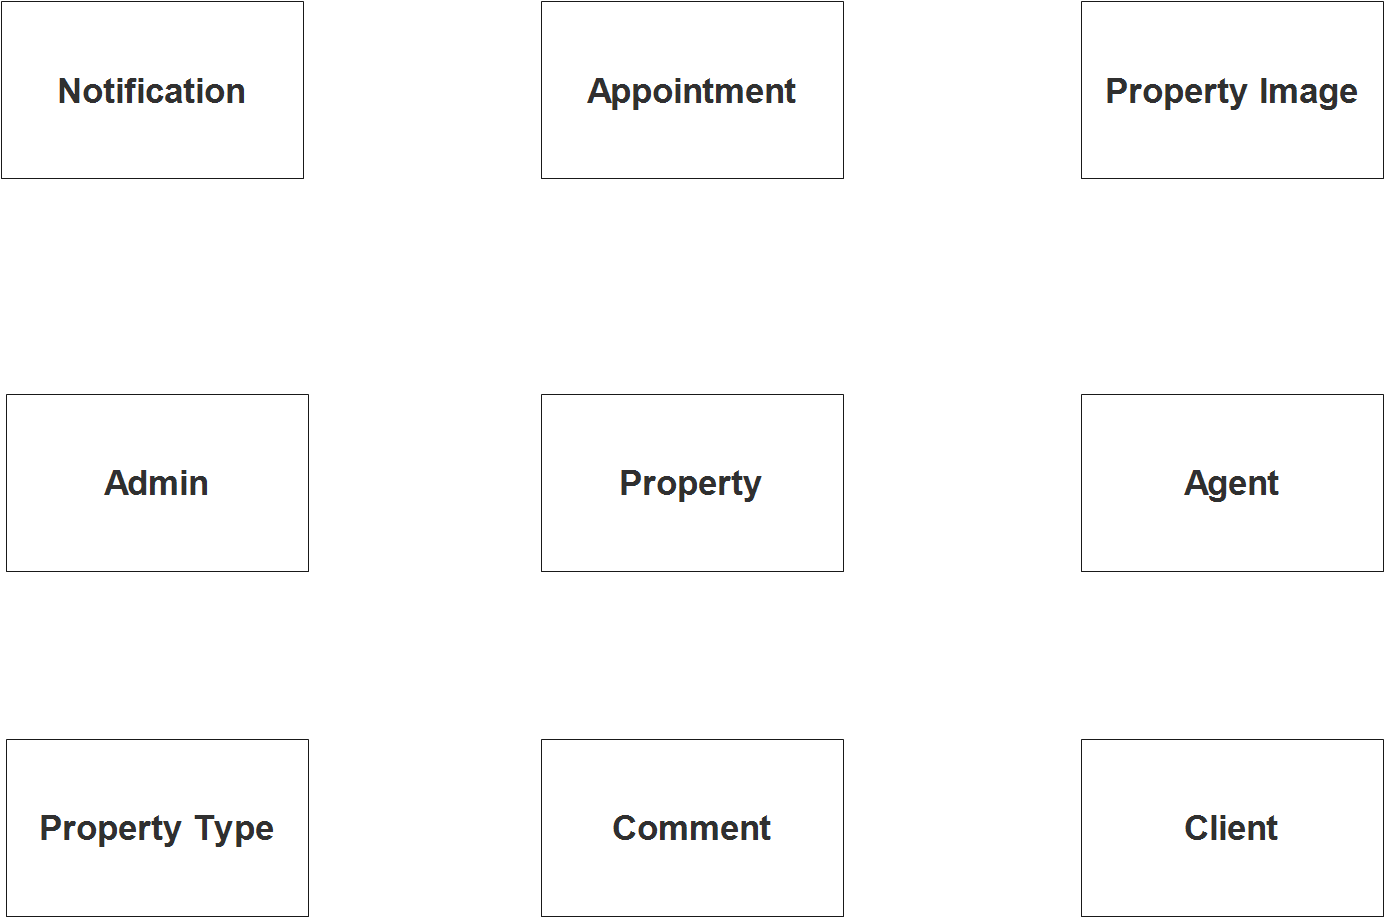 Real Estate Management System ER Diagram - Step 1 Identify Entities